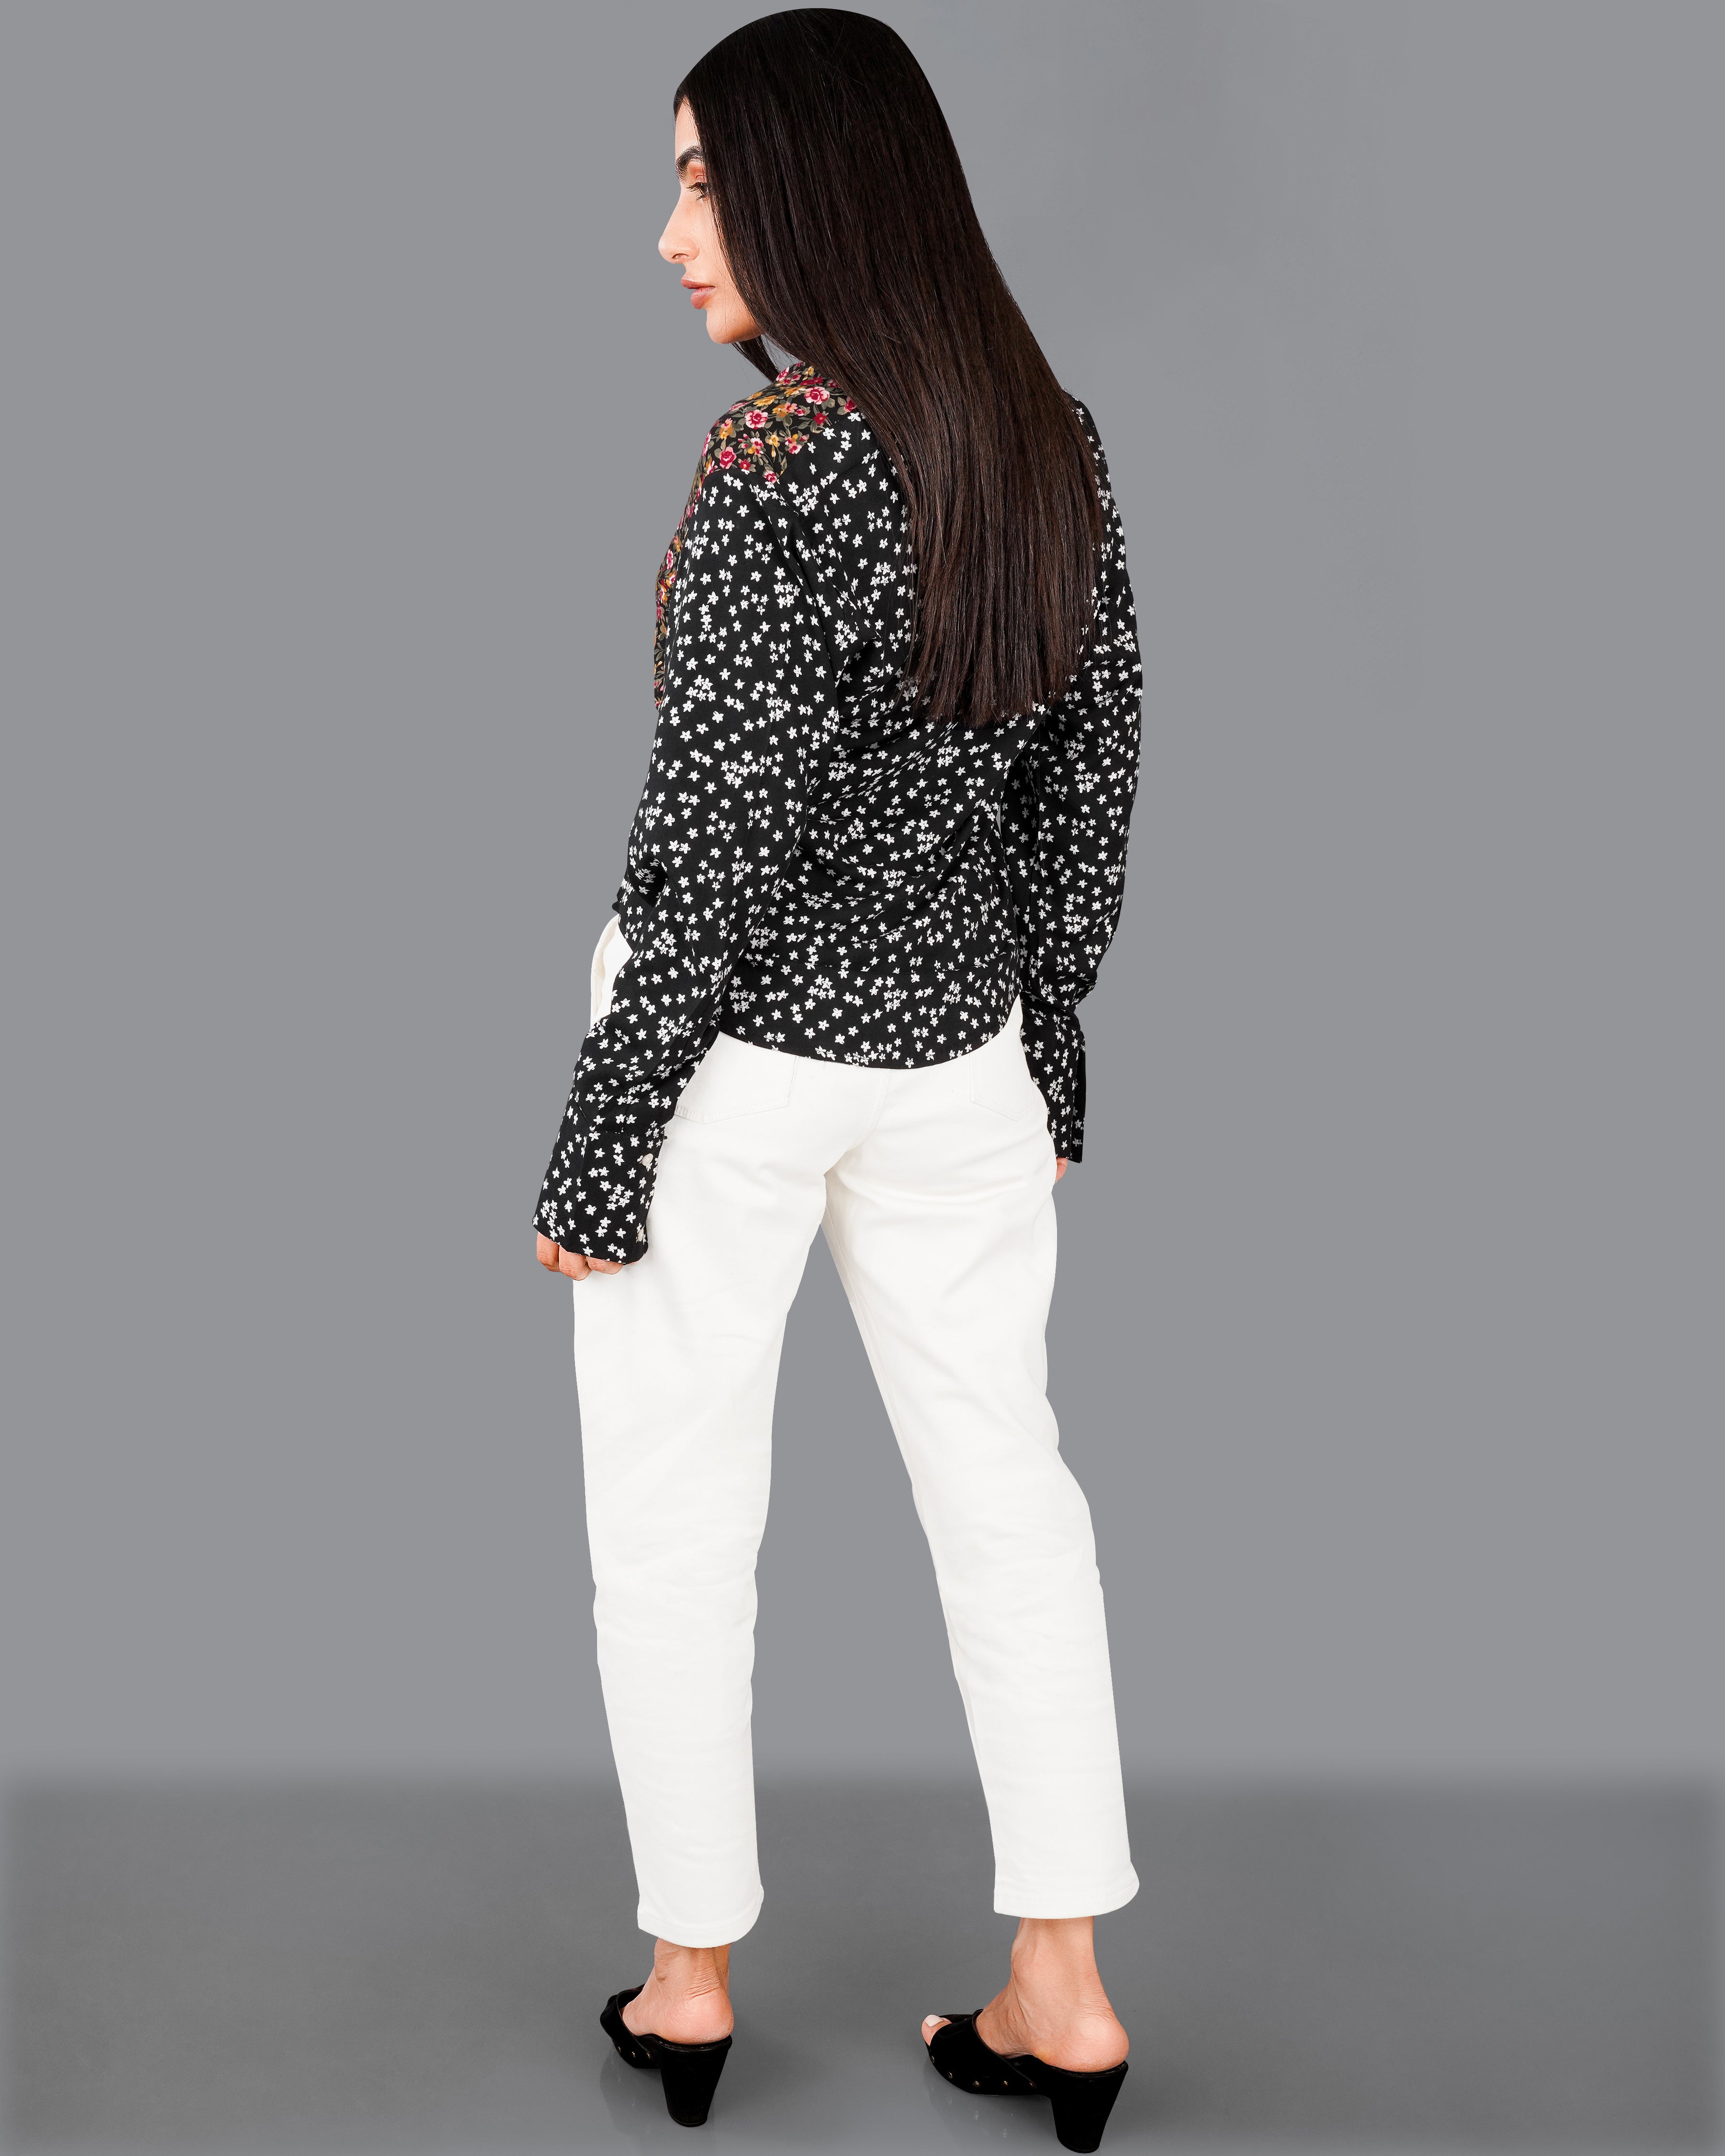 Jade Black Ditsy Printed Premium Cotton Shirt WS017-M-32, WS017-M-34, WS017-M-36, WS017-M-38, WS017-M-40, WS017-M-42